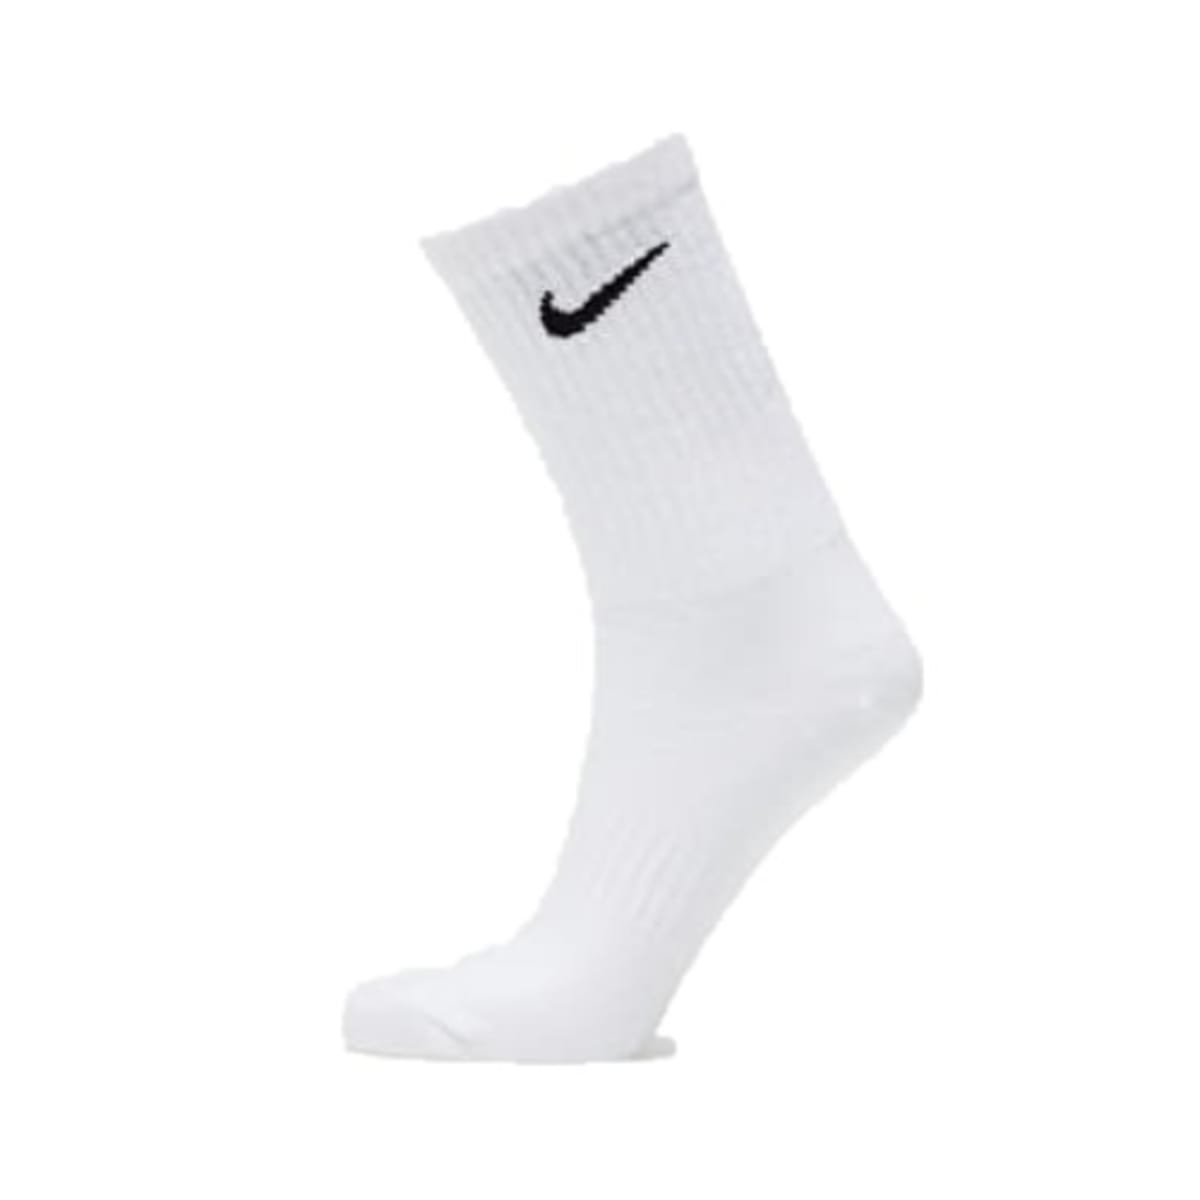 Nike White Cotton Mid Socks